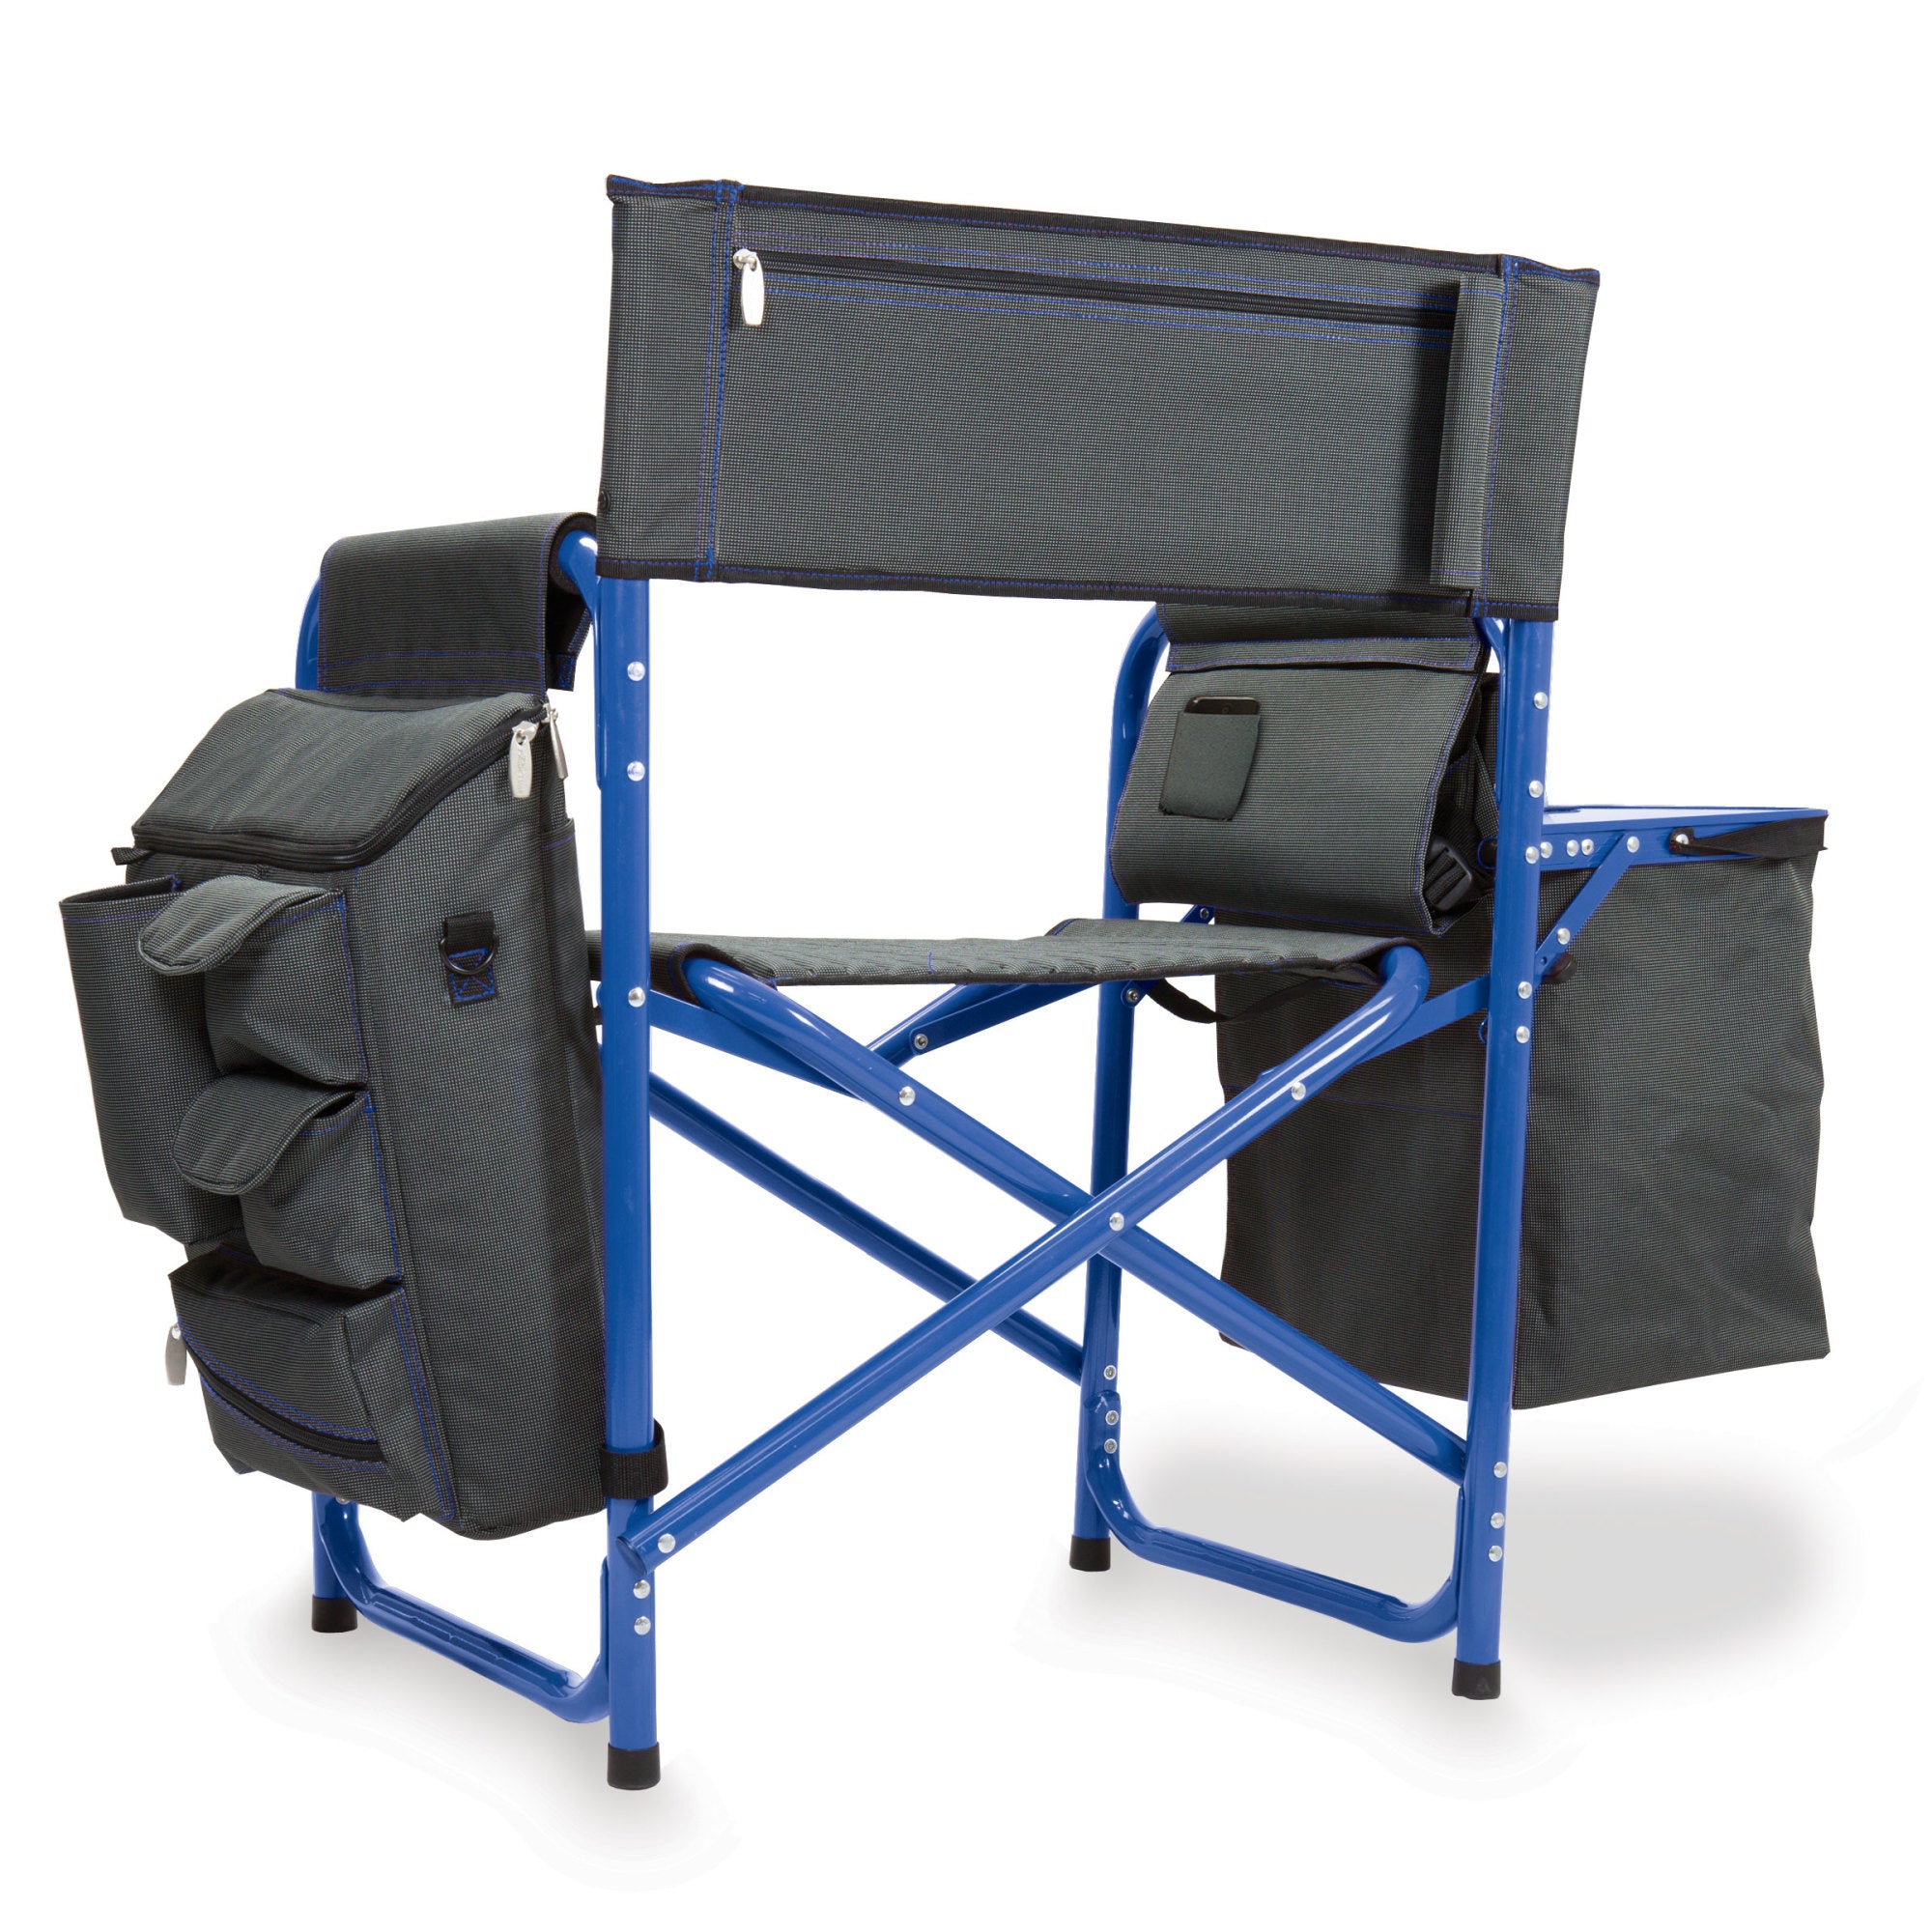 Georgia Tech Yellow Jackets - Fusion Camping Chair